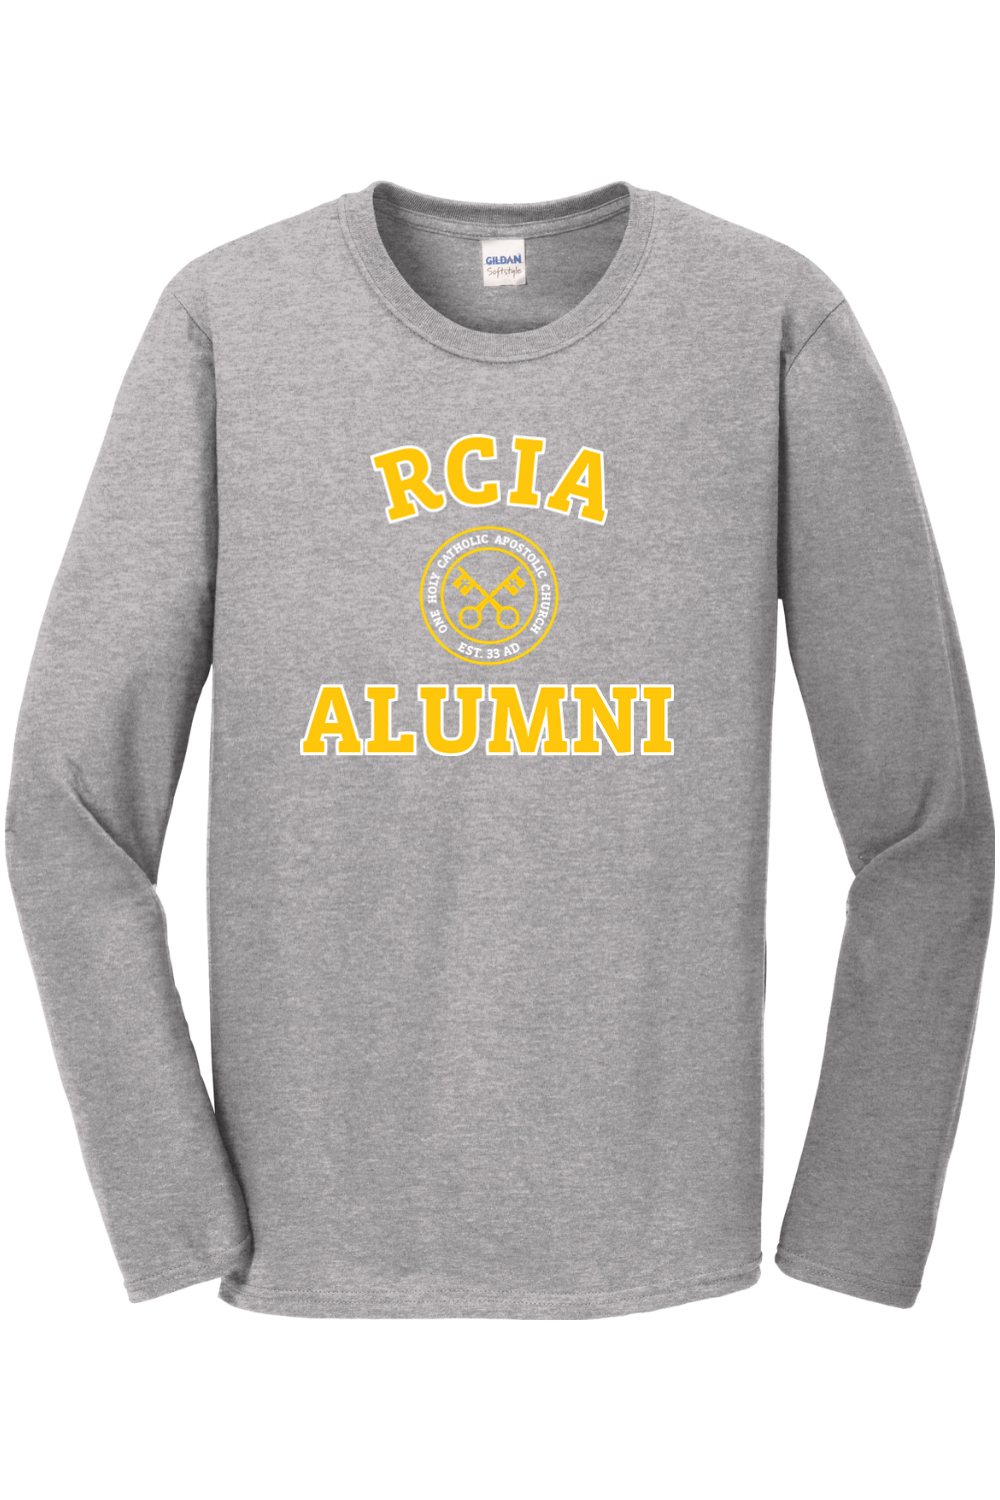 RCIA Alumni Long Sleeve